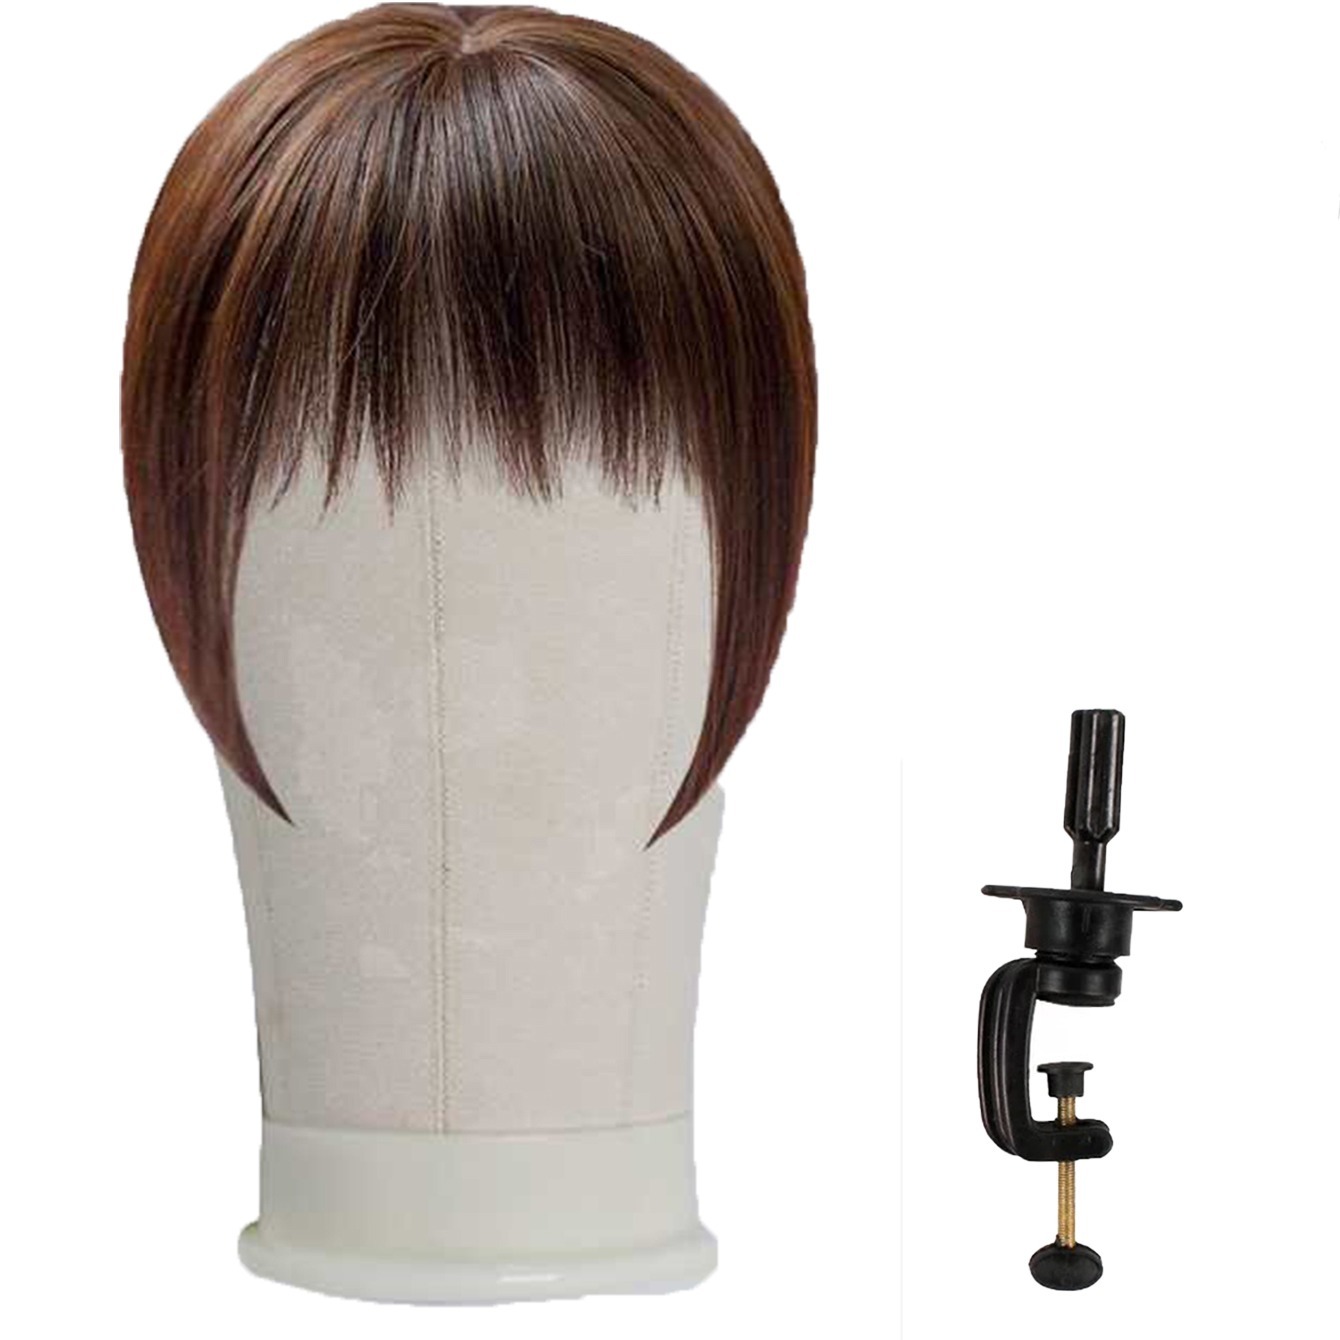  VILLCASE 500 Pcs Wig T-pin Mannequin Head Wig Pin Wig